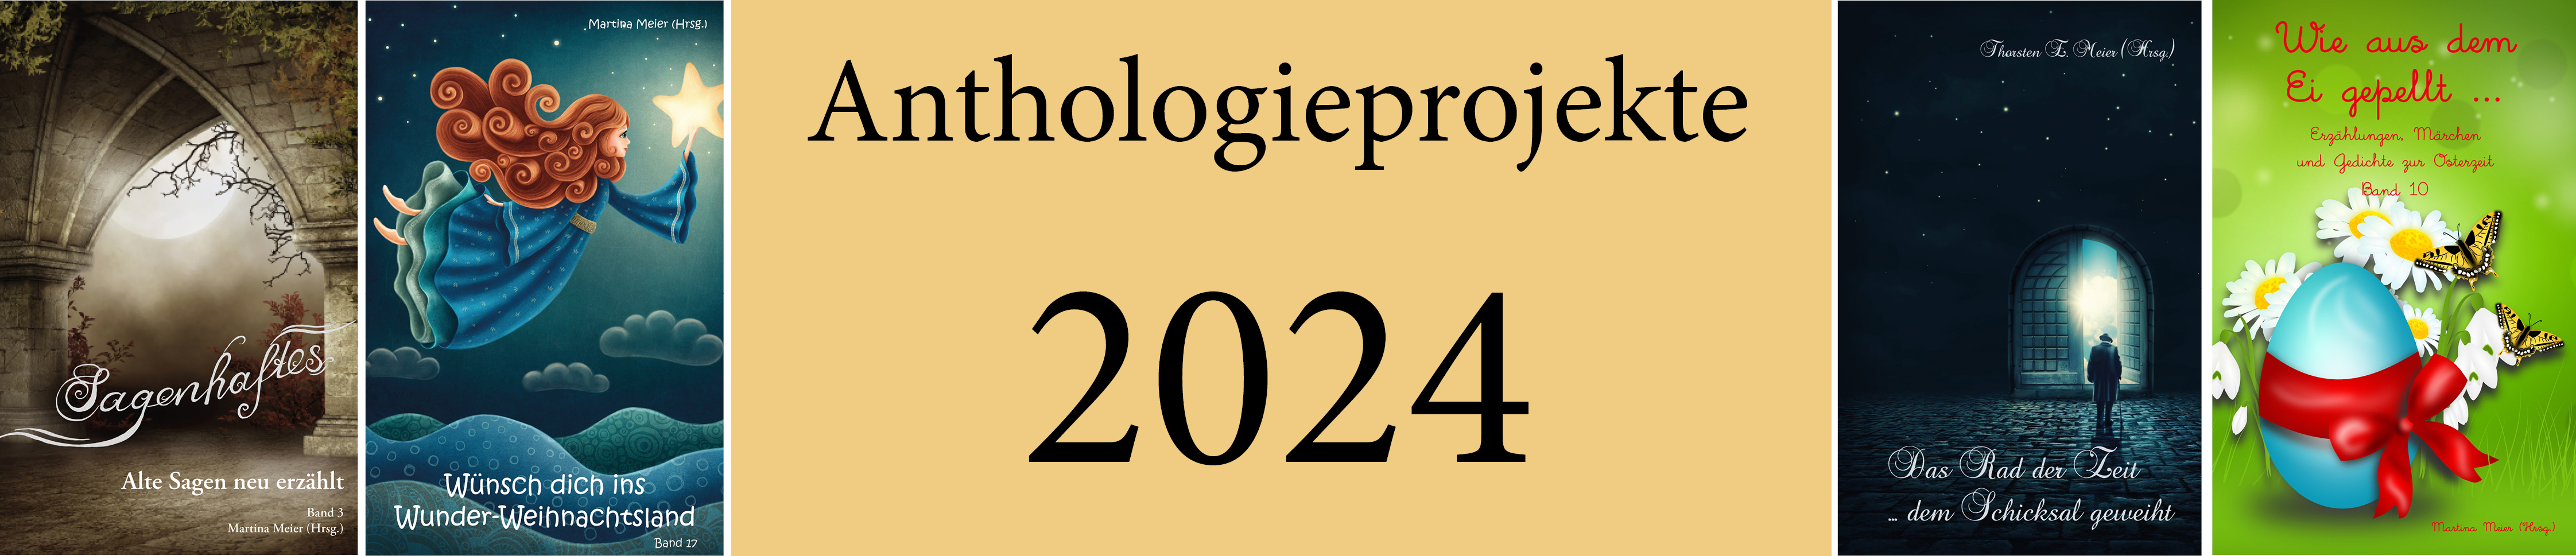 Vignette_Anthologieprojekte_2024